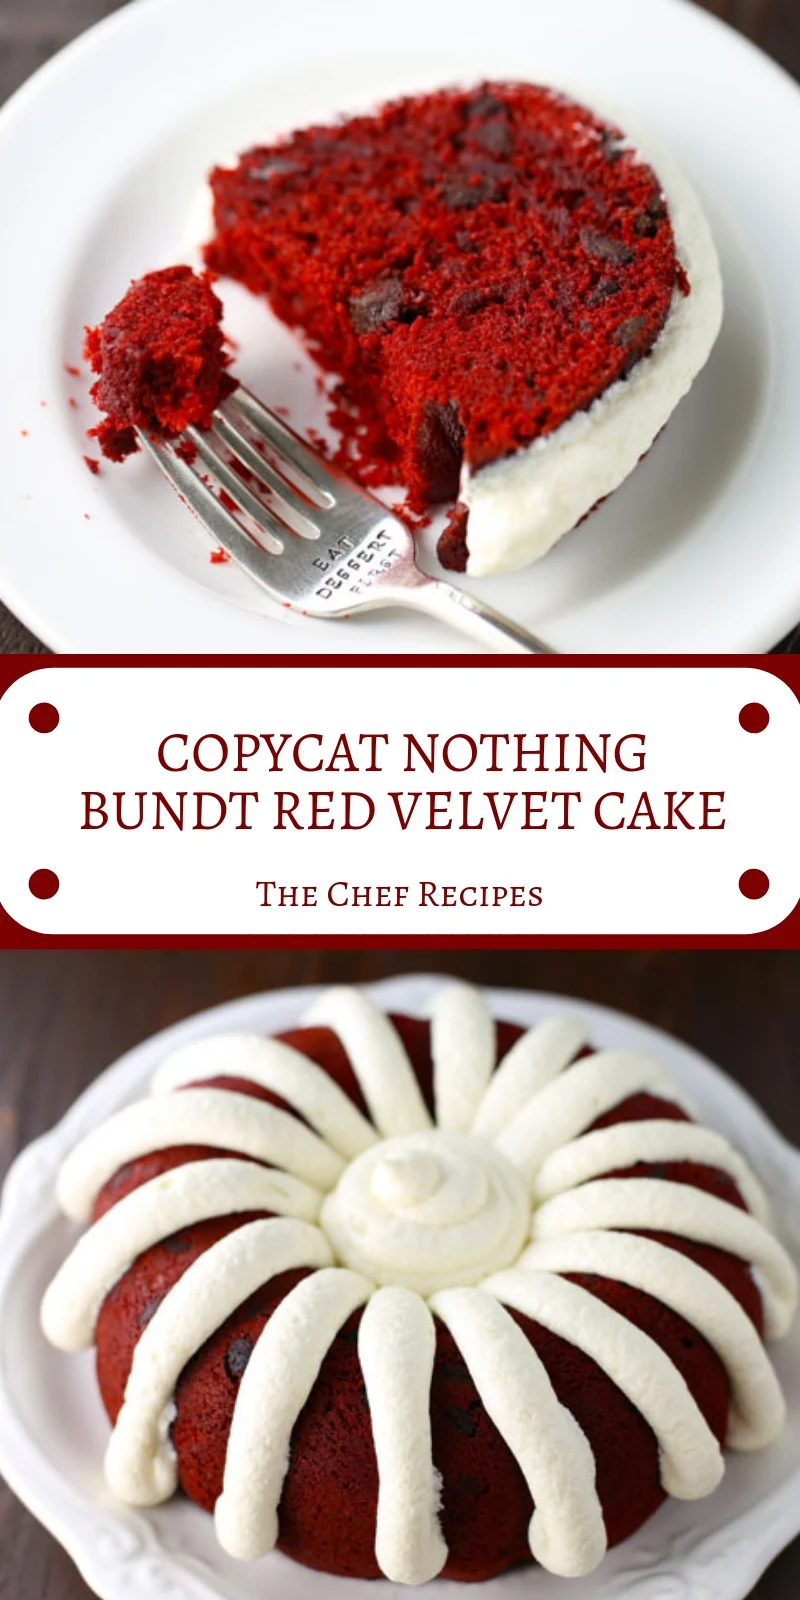 COPYCAT NOTHING BUNDT RED VELVET CAKE